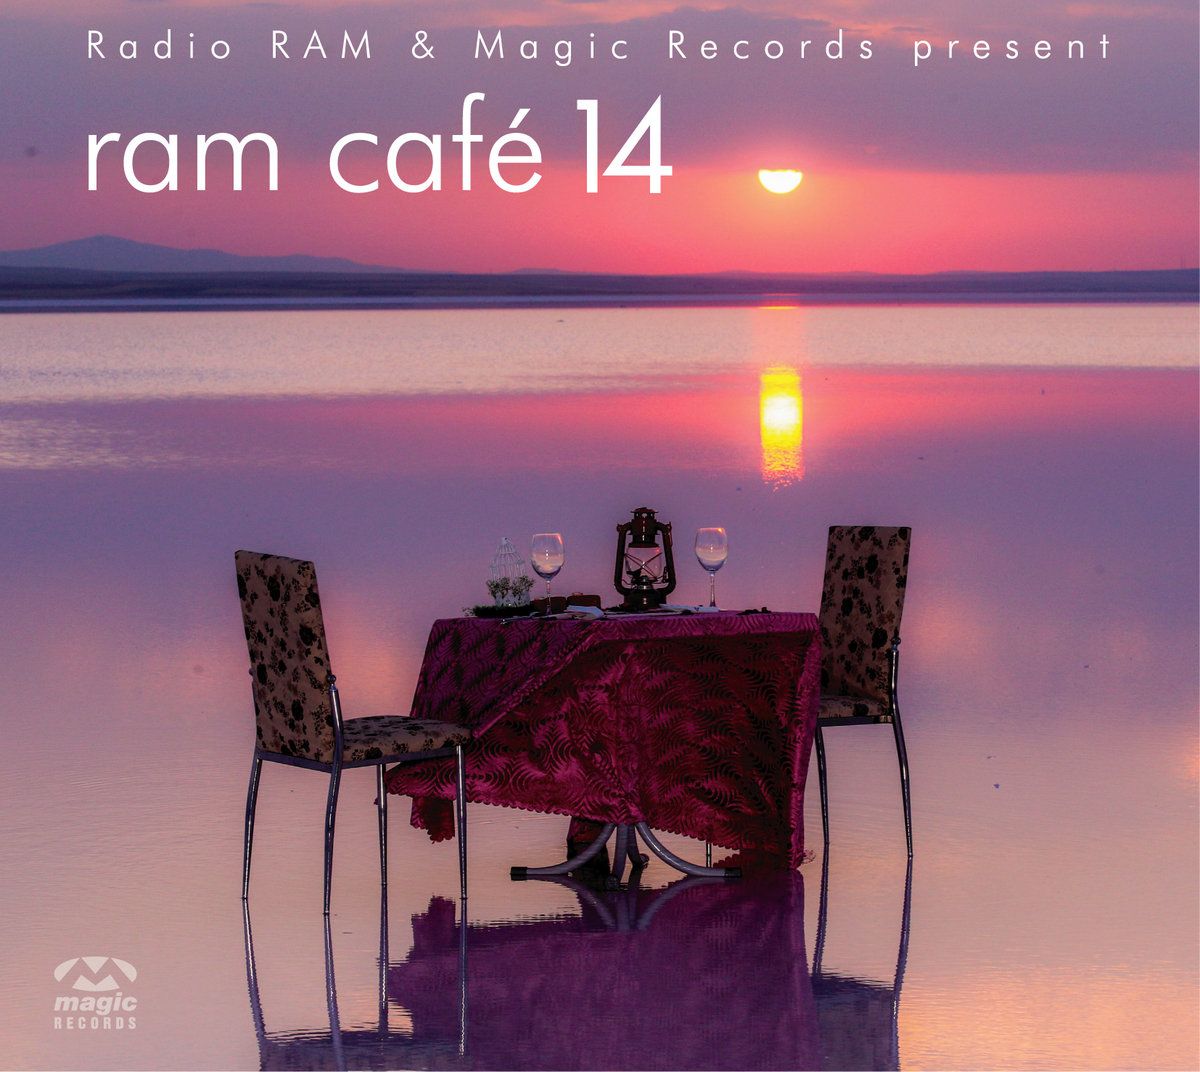 Ram Cafe 14